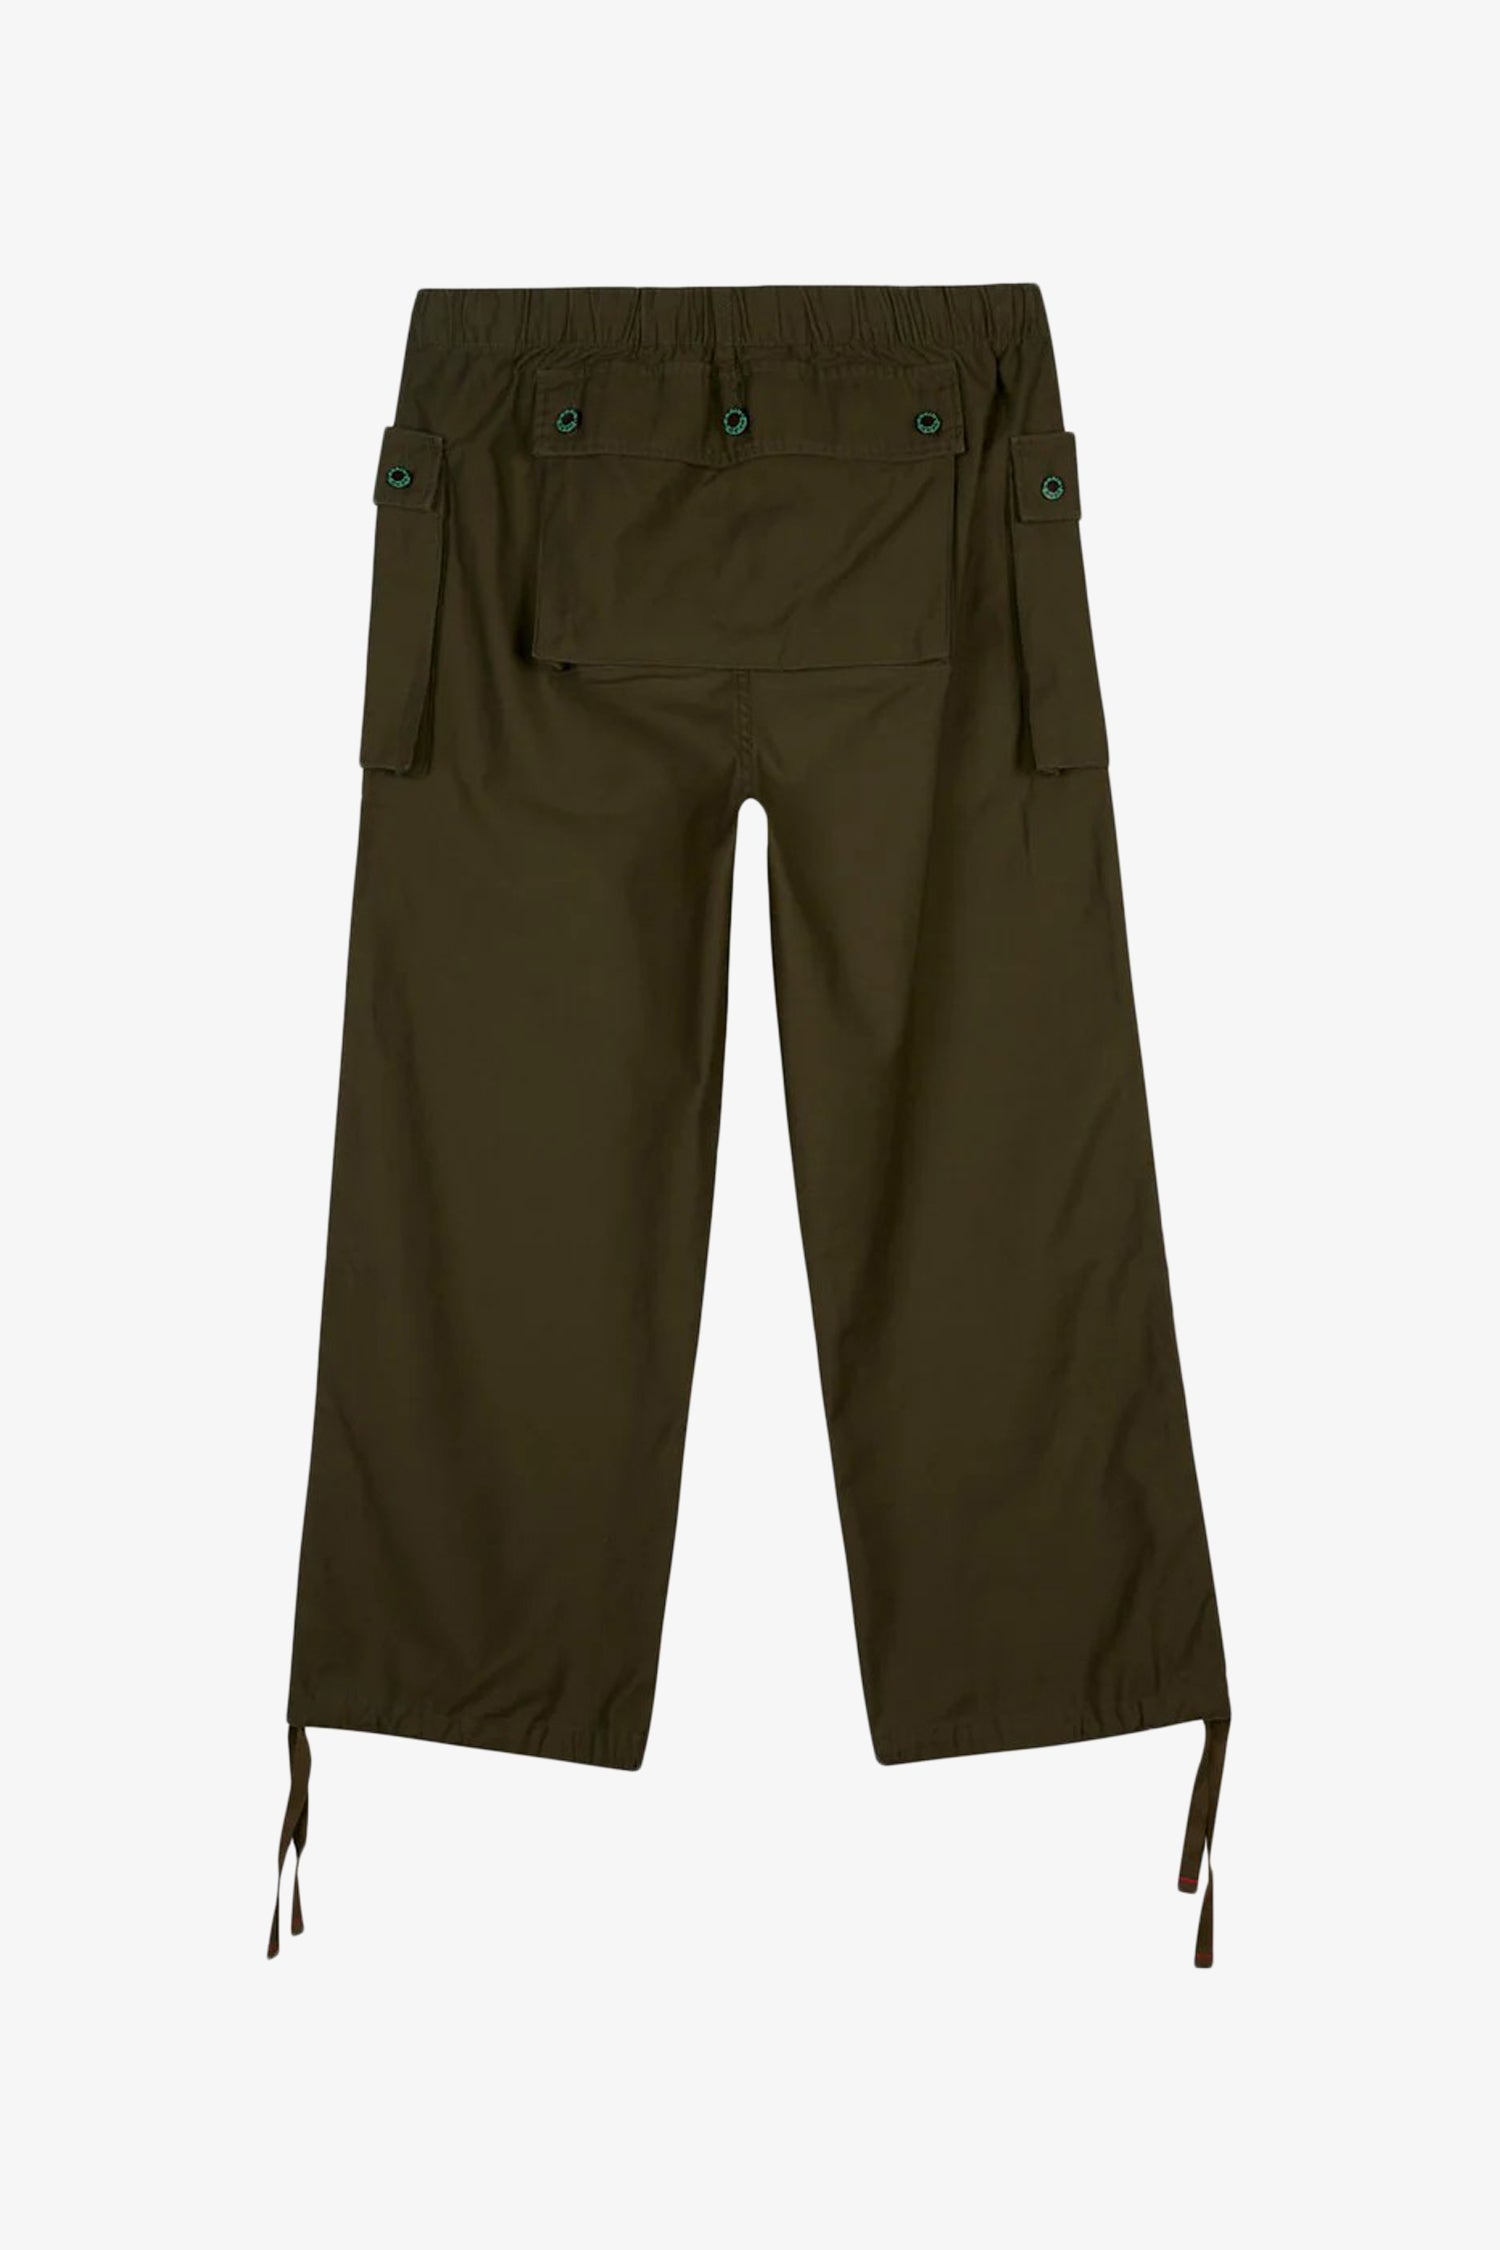 Military Cloth P44 Jungle Pant- Selectshop FRAME